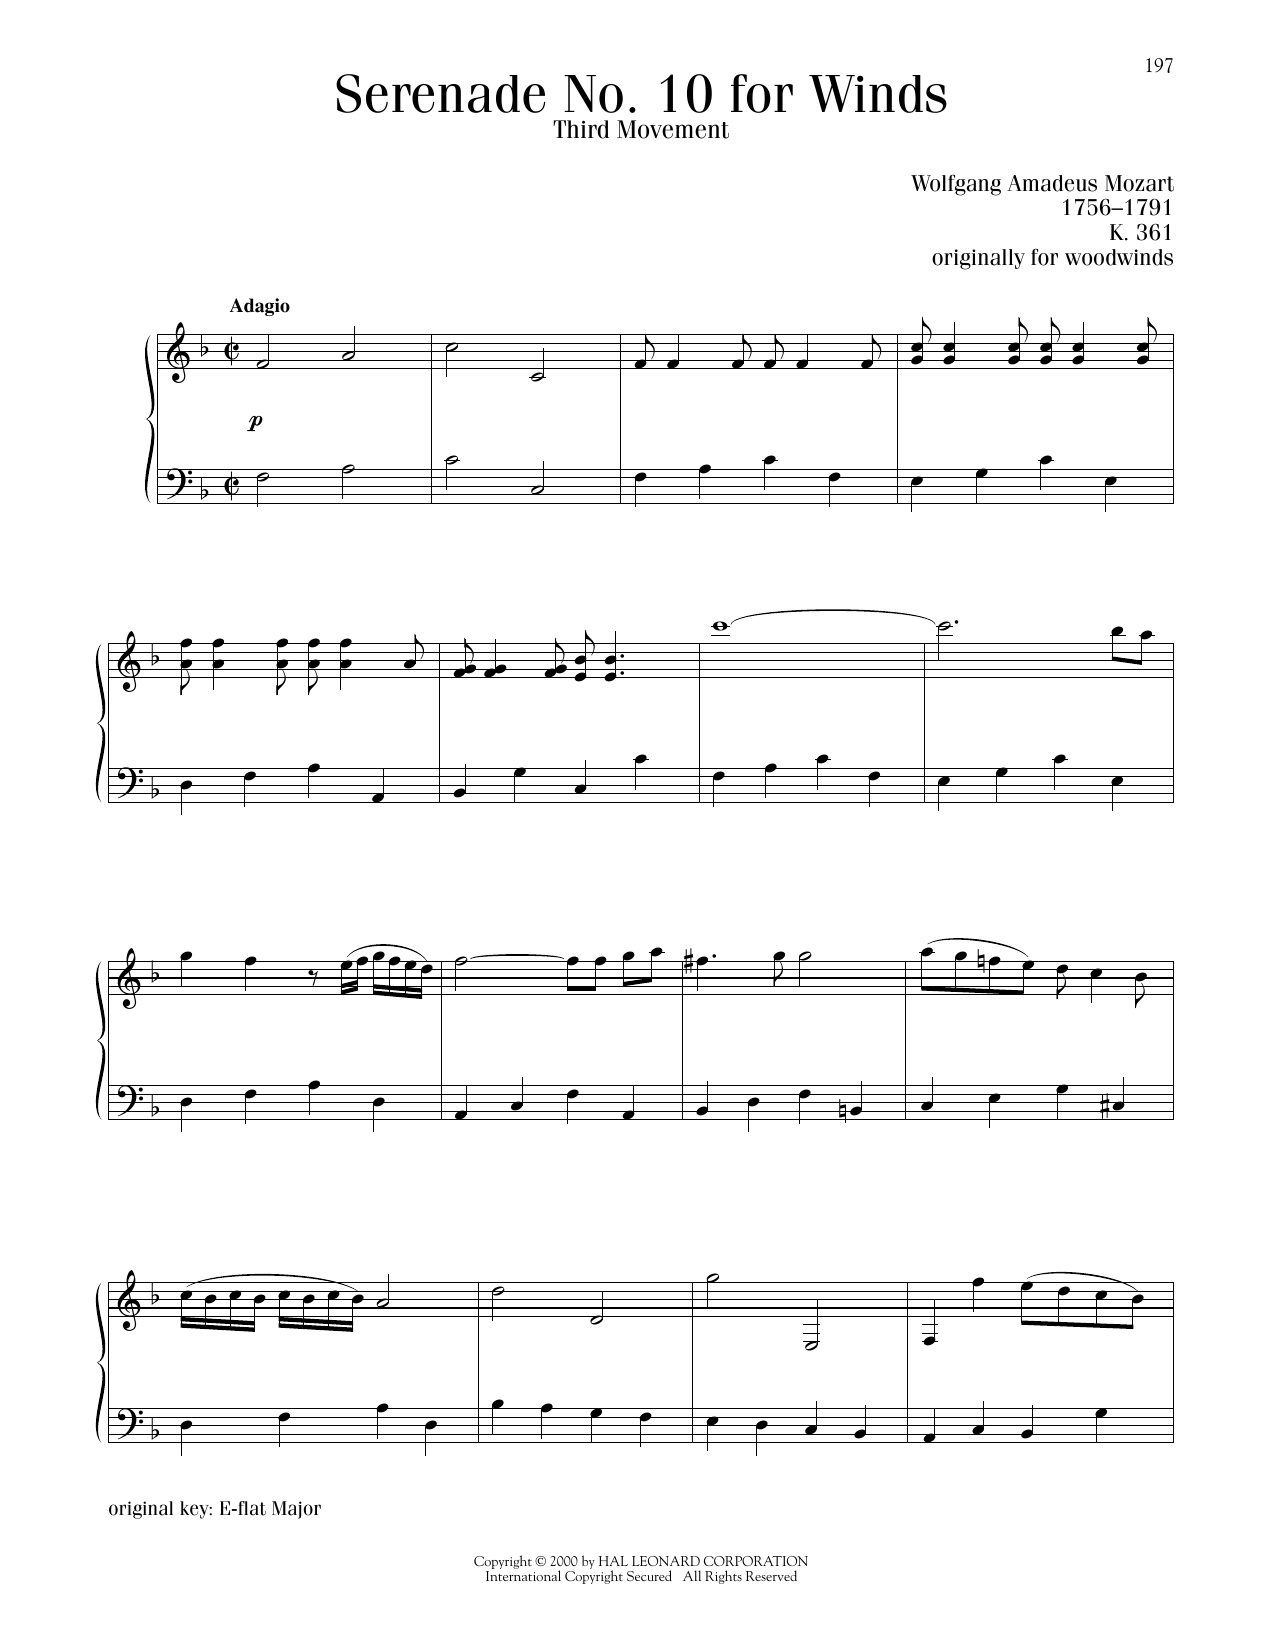 Wolfgang Amadeus Mozart Serenade No. 10 For Winds, Third Movement sheet music notes printable PDF score